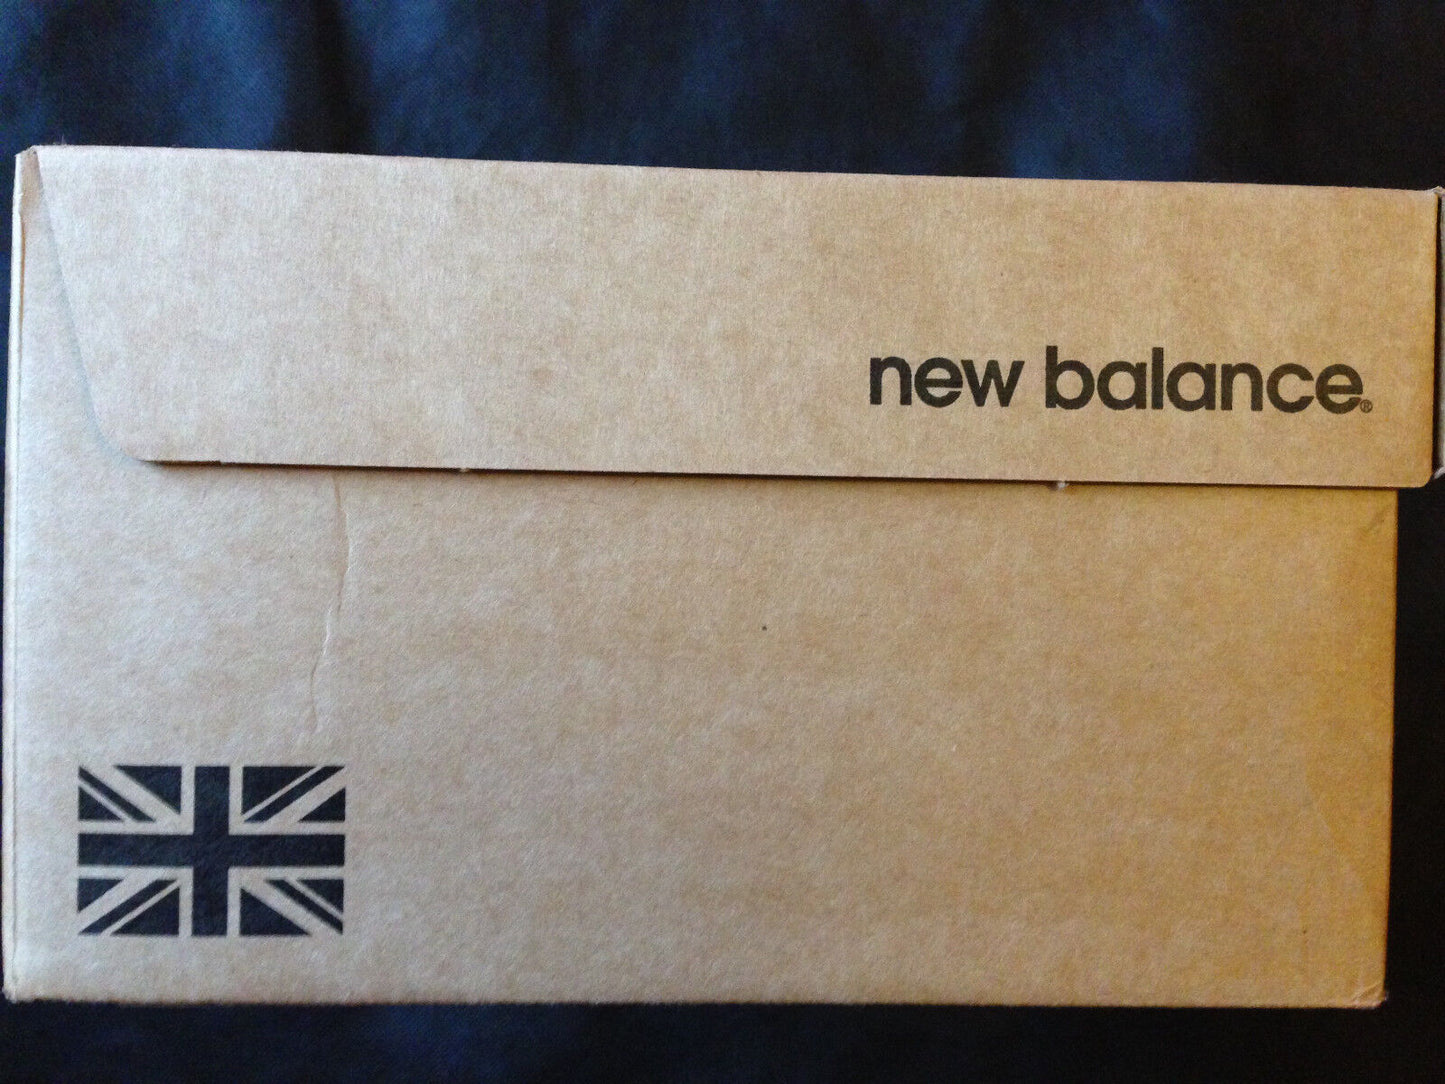 New Balance M770RBB 770 Made in UK vintage colourway US 12 UK 11,5 EU 46,5